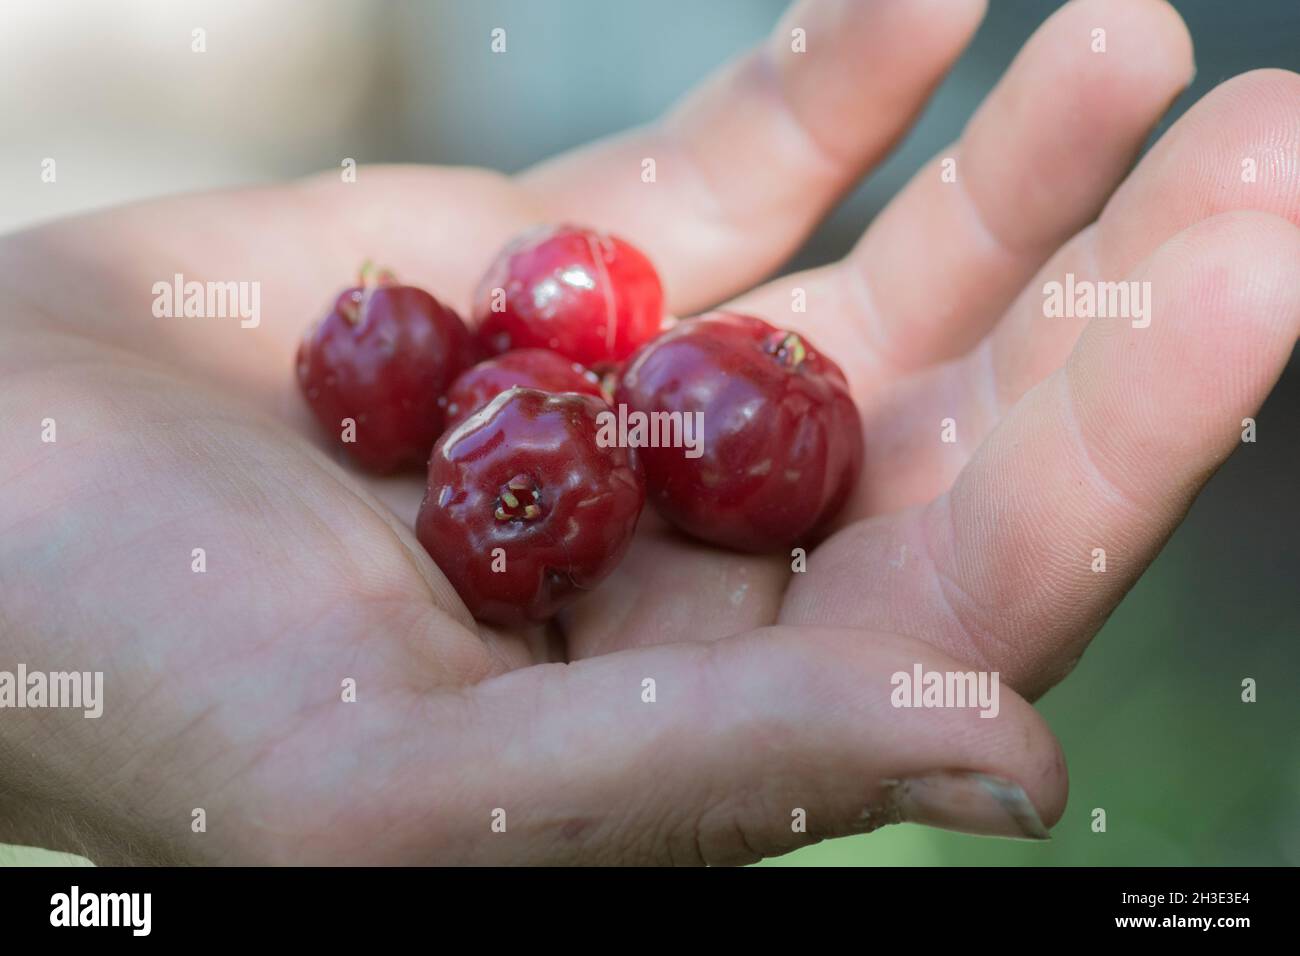 Hand full of Pitanga (Eugenia uniflora) red fruits. Stock Photo